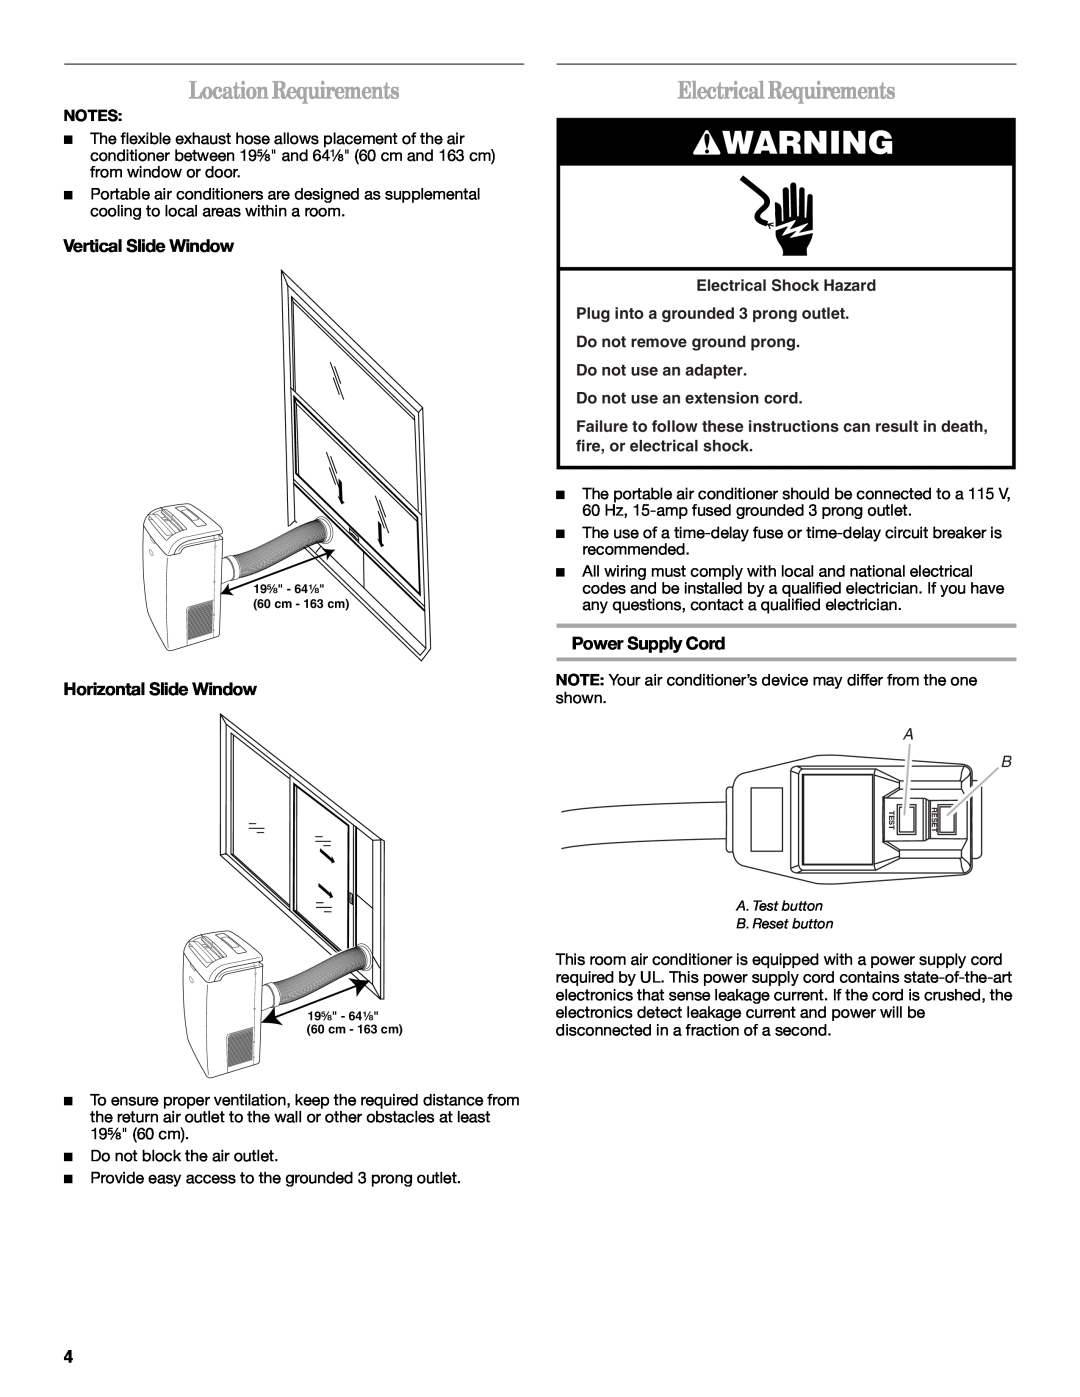 Whirlpool 1328891 manual LocationRequirements, ElectricalRequirements, Vertical Slide Window, Horizontal Slide Window 